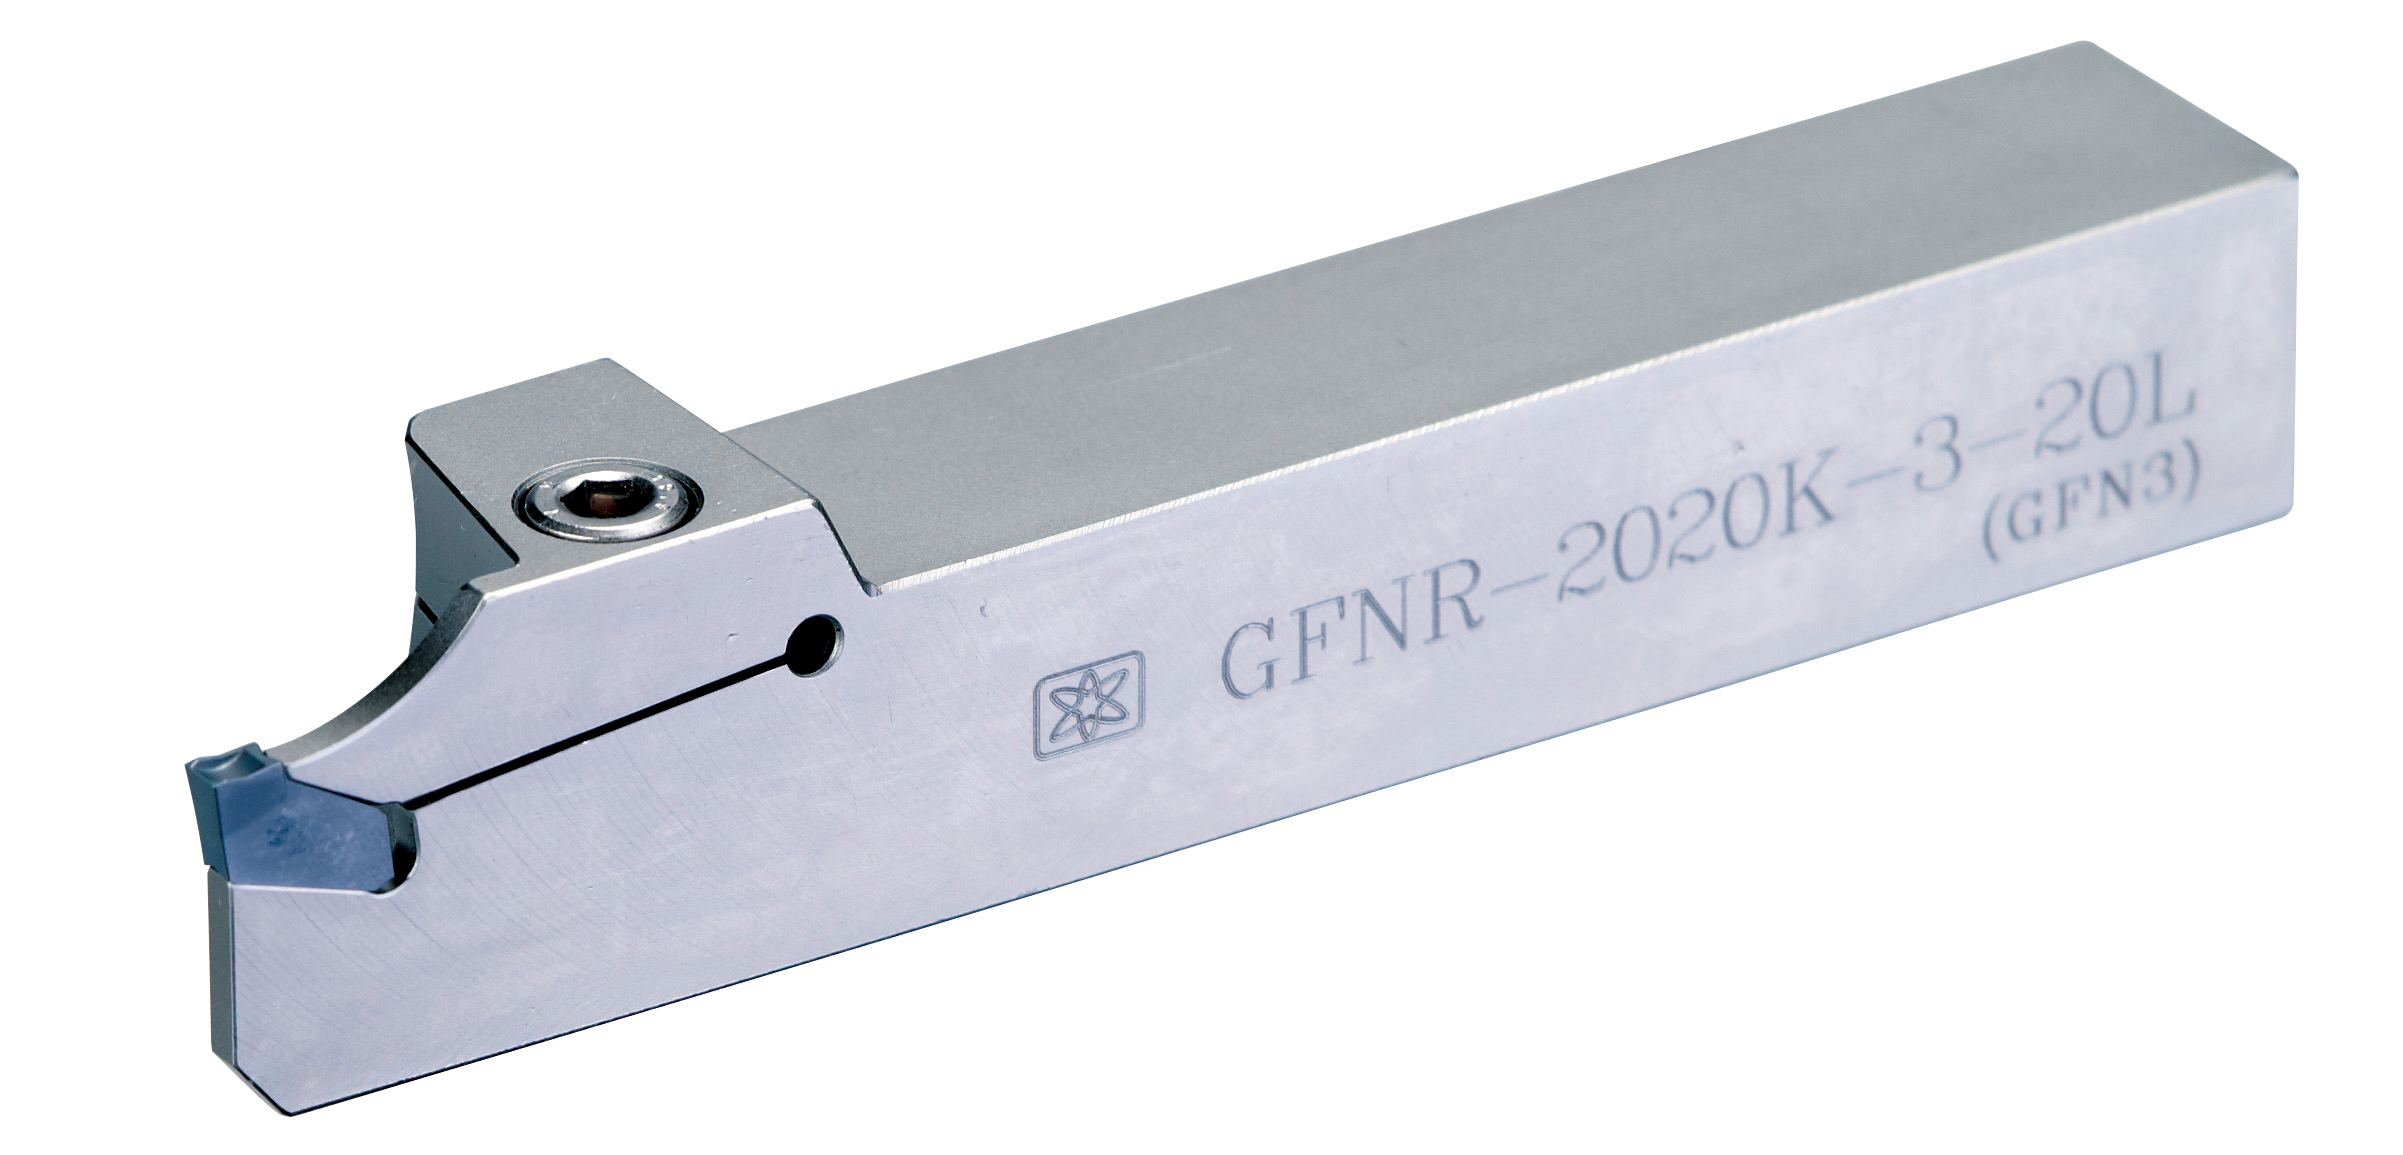 Products|GFNR (GFN2 / GFN3) External Grooving Tool Holder